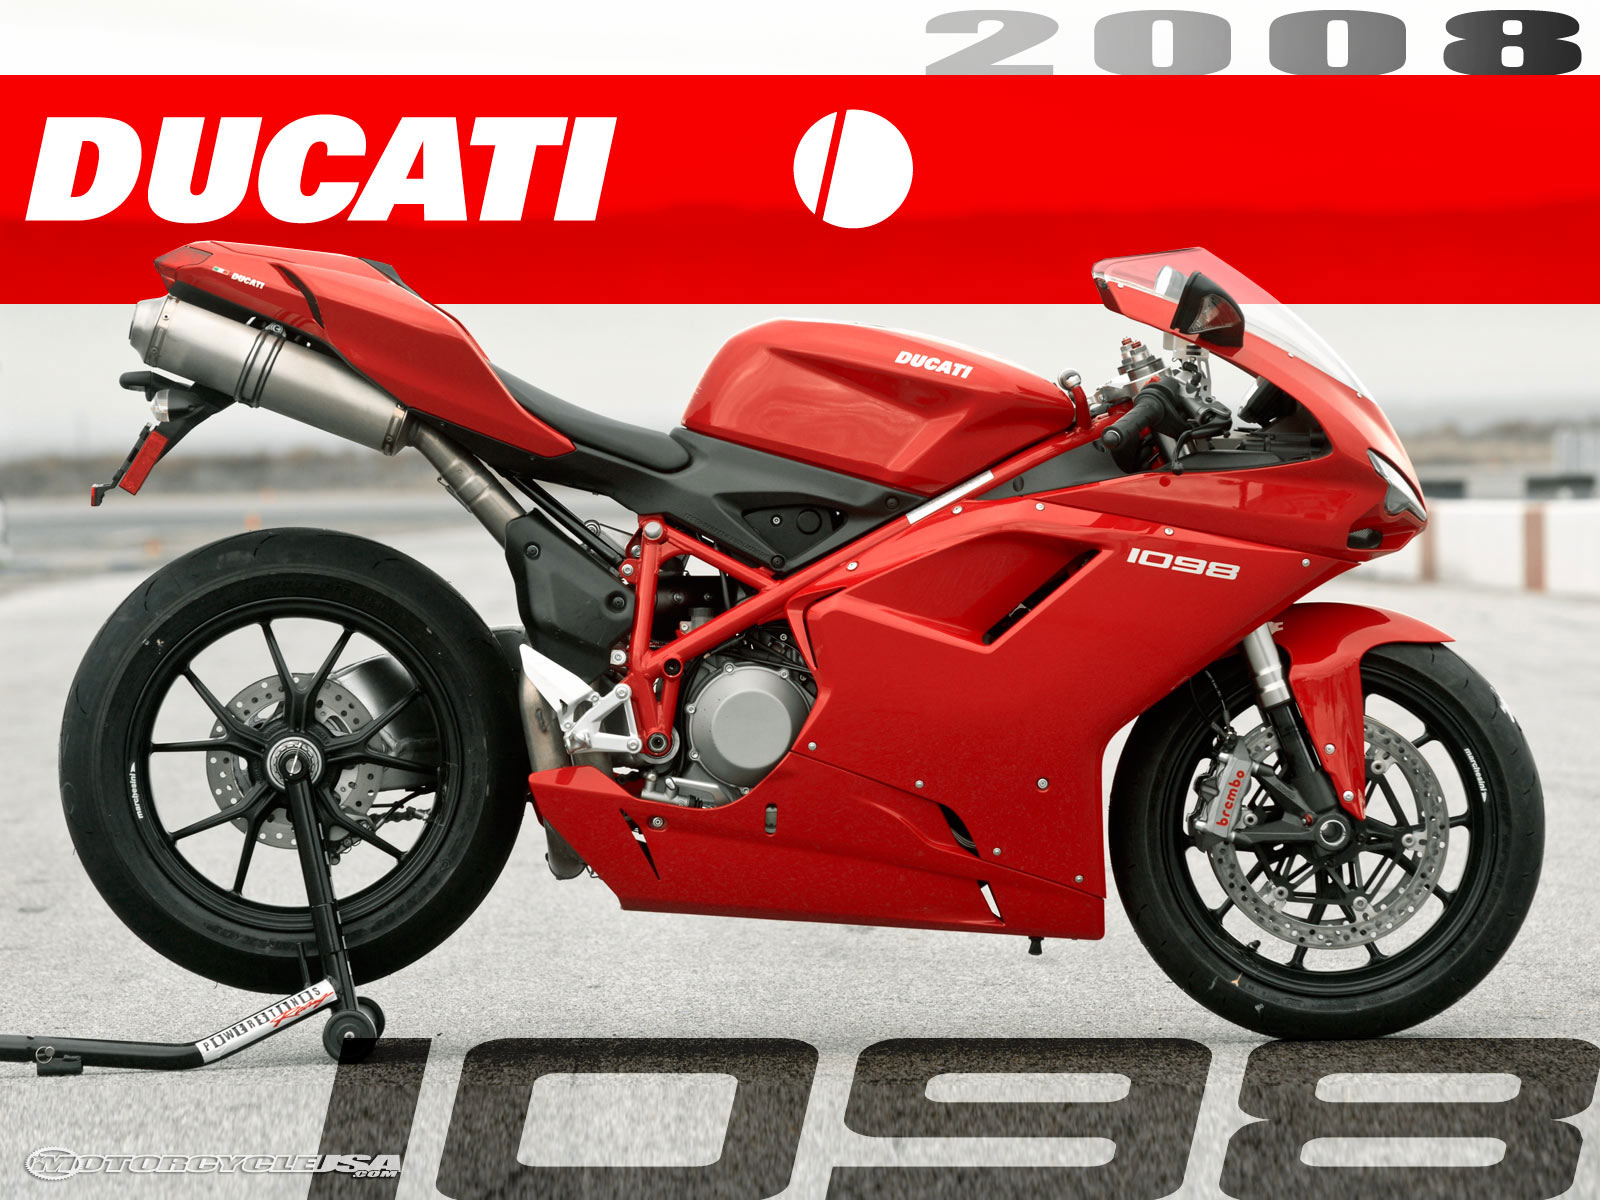 Ducati 1098 1099cc photo - 4